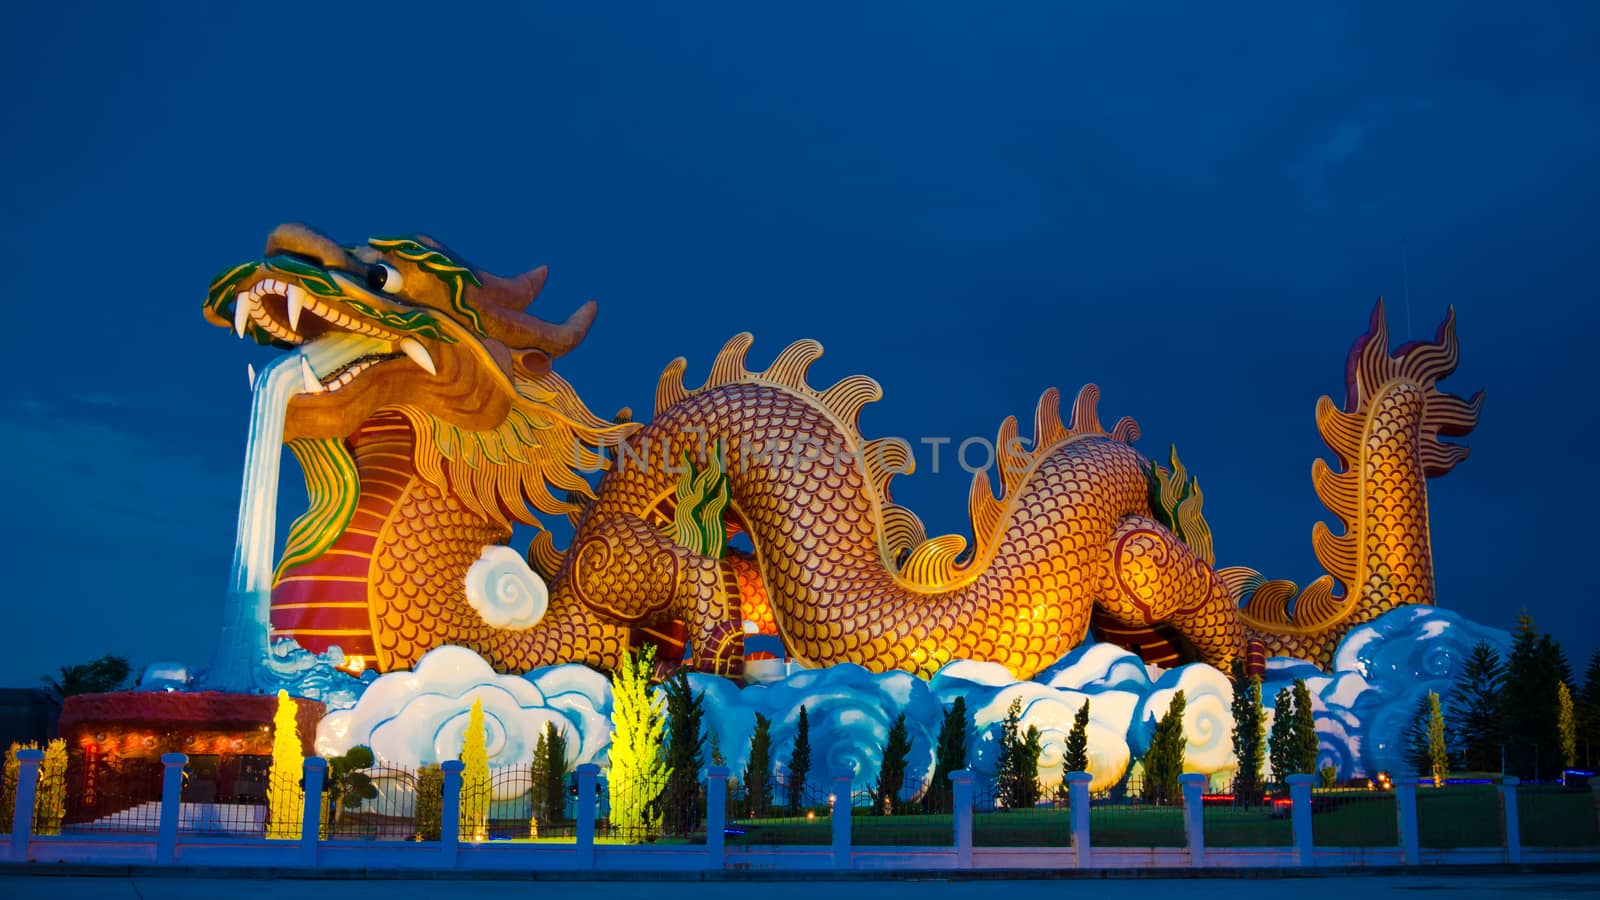 Big dragon statue at night, Supanburi Thailand by pixbox77